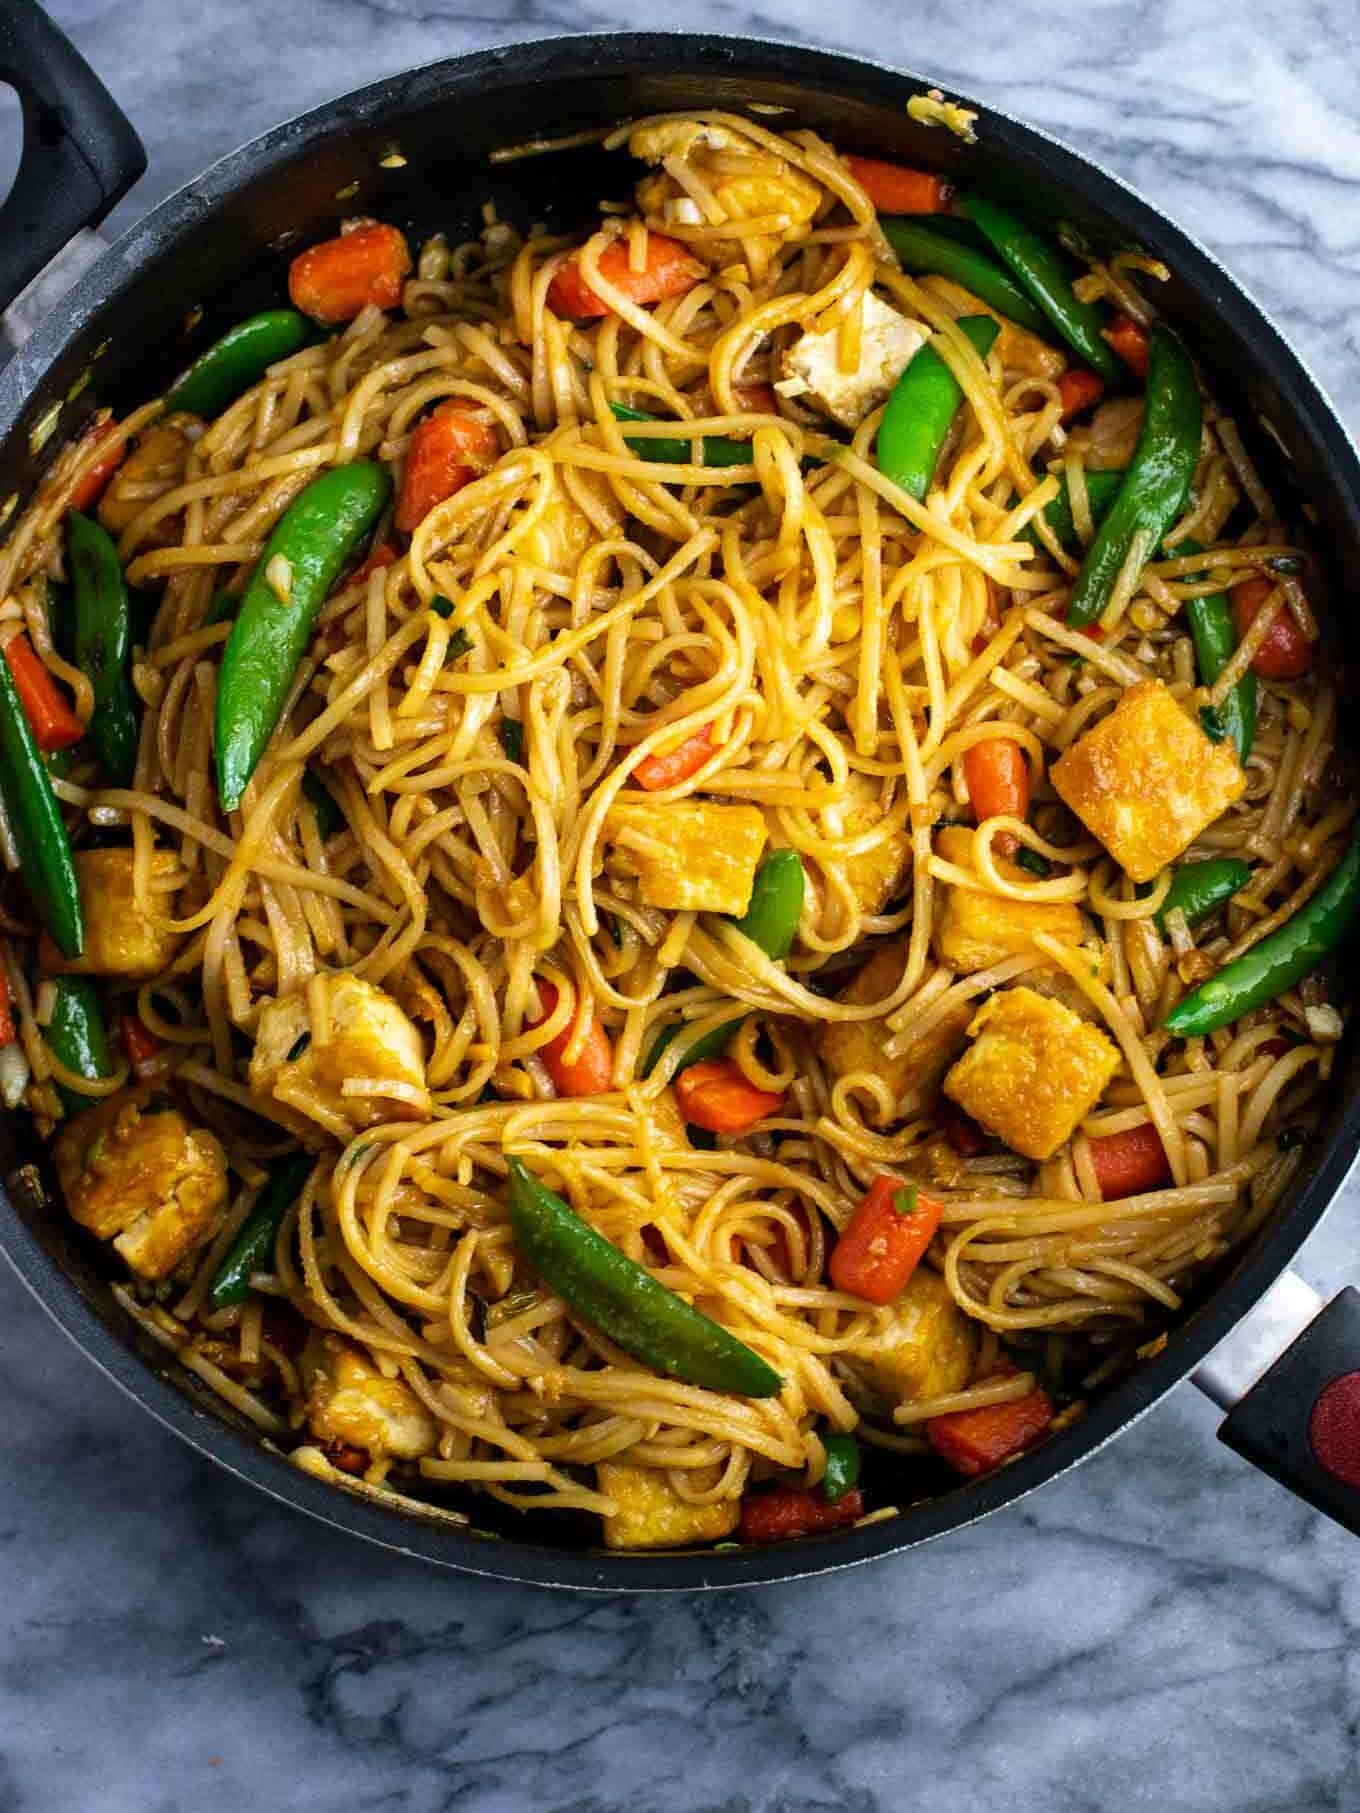 Vegan stir fry noodles with sugar snap peas and carrots. Homemade 3 ingredient stir fry sauce makes this taste amazing! #tofu #stirfrynoodles #stirfry #vegan #dinner #stirfryrecipe #vegetarian #tofustirfy